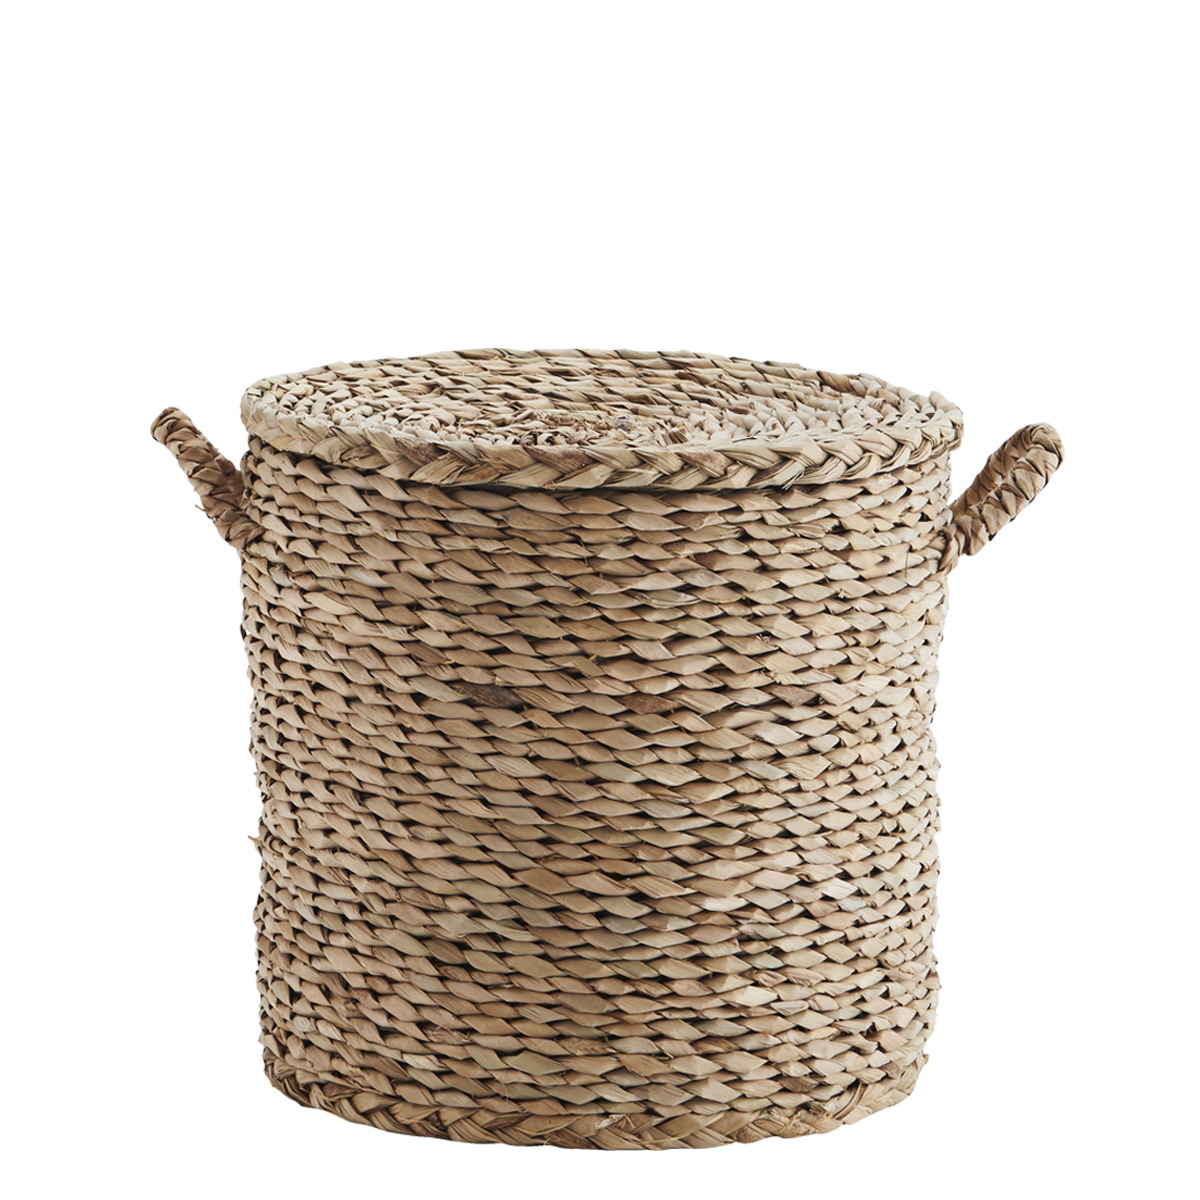 Seagrass basket w/ lid